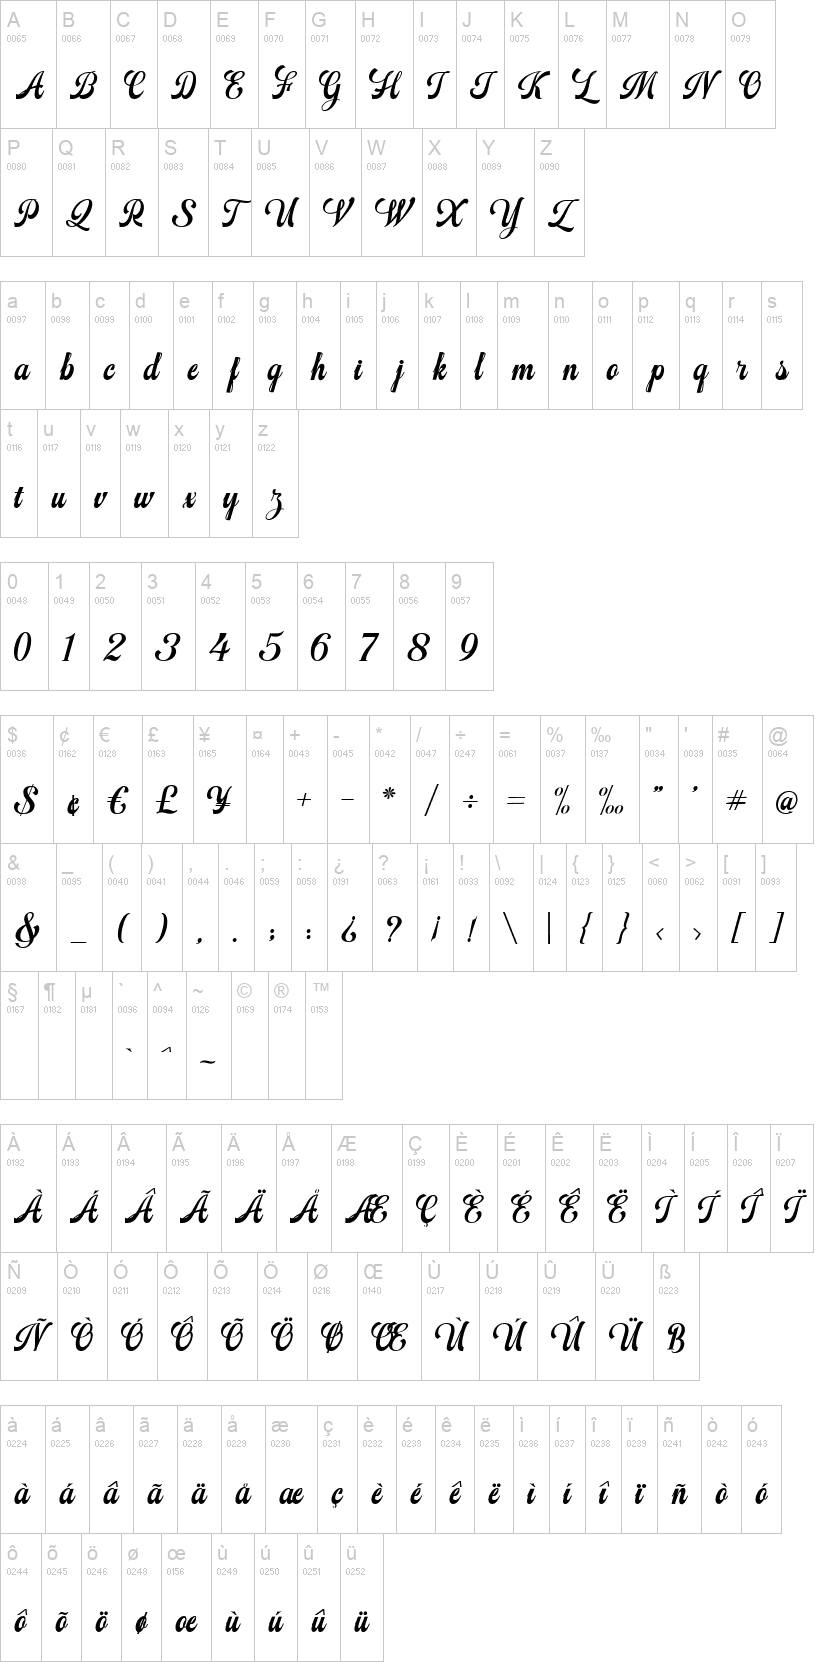 Mathovia Script